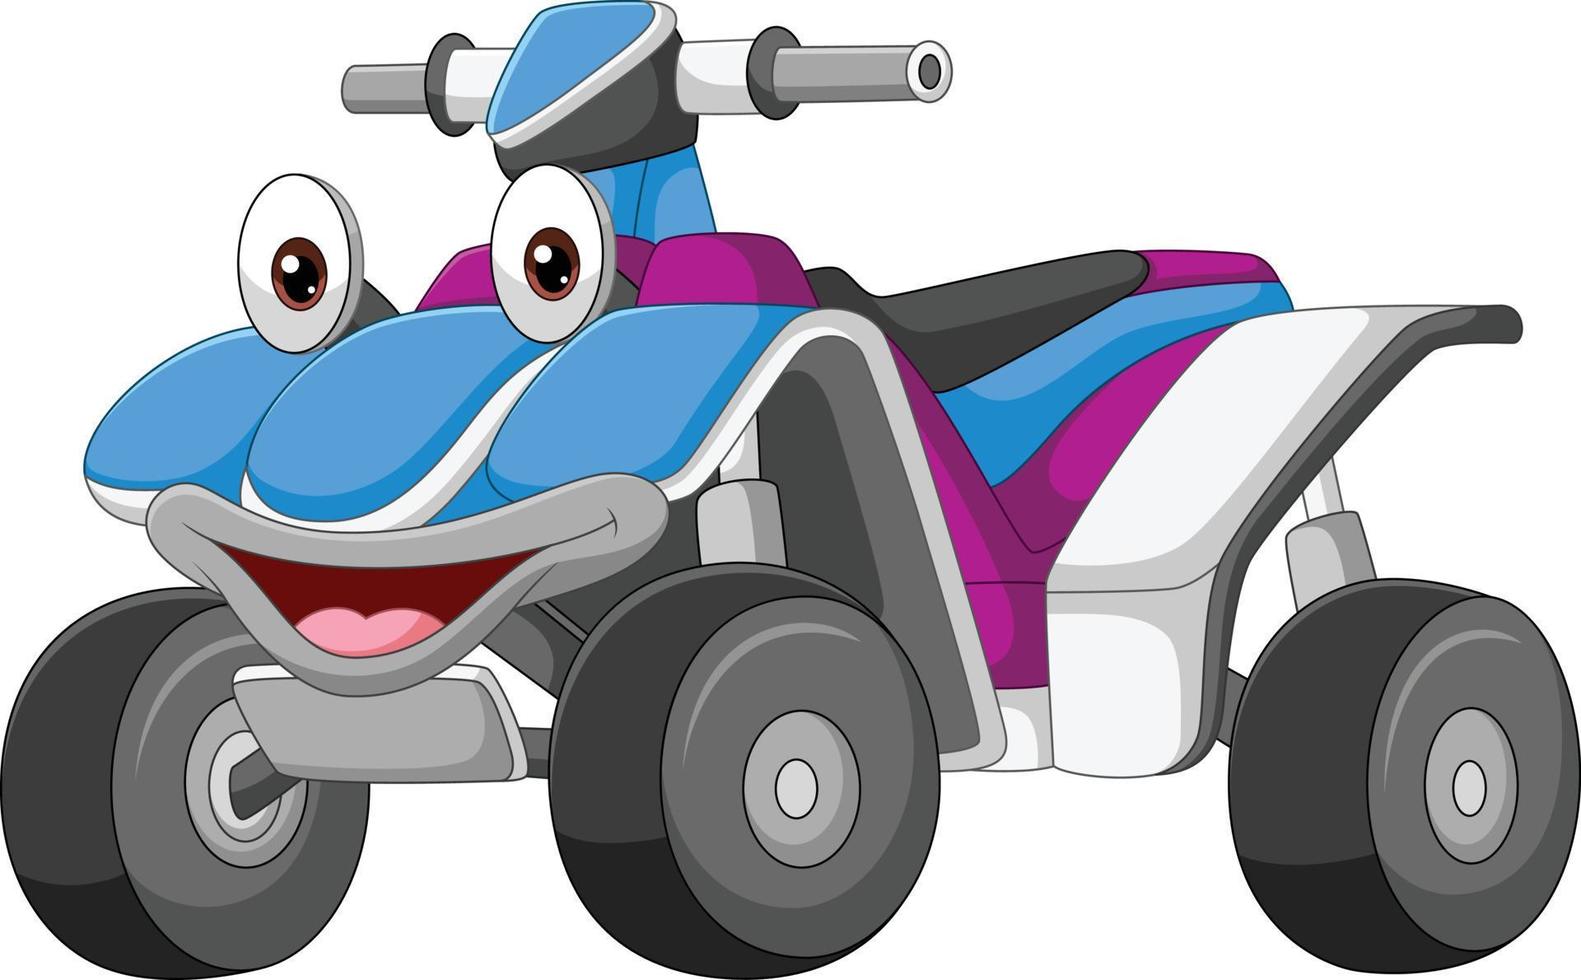 Cartoon smiling Atv bike mascot vector